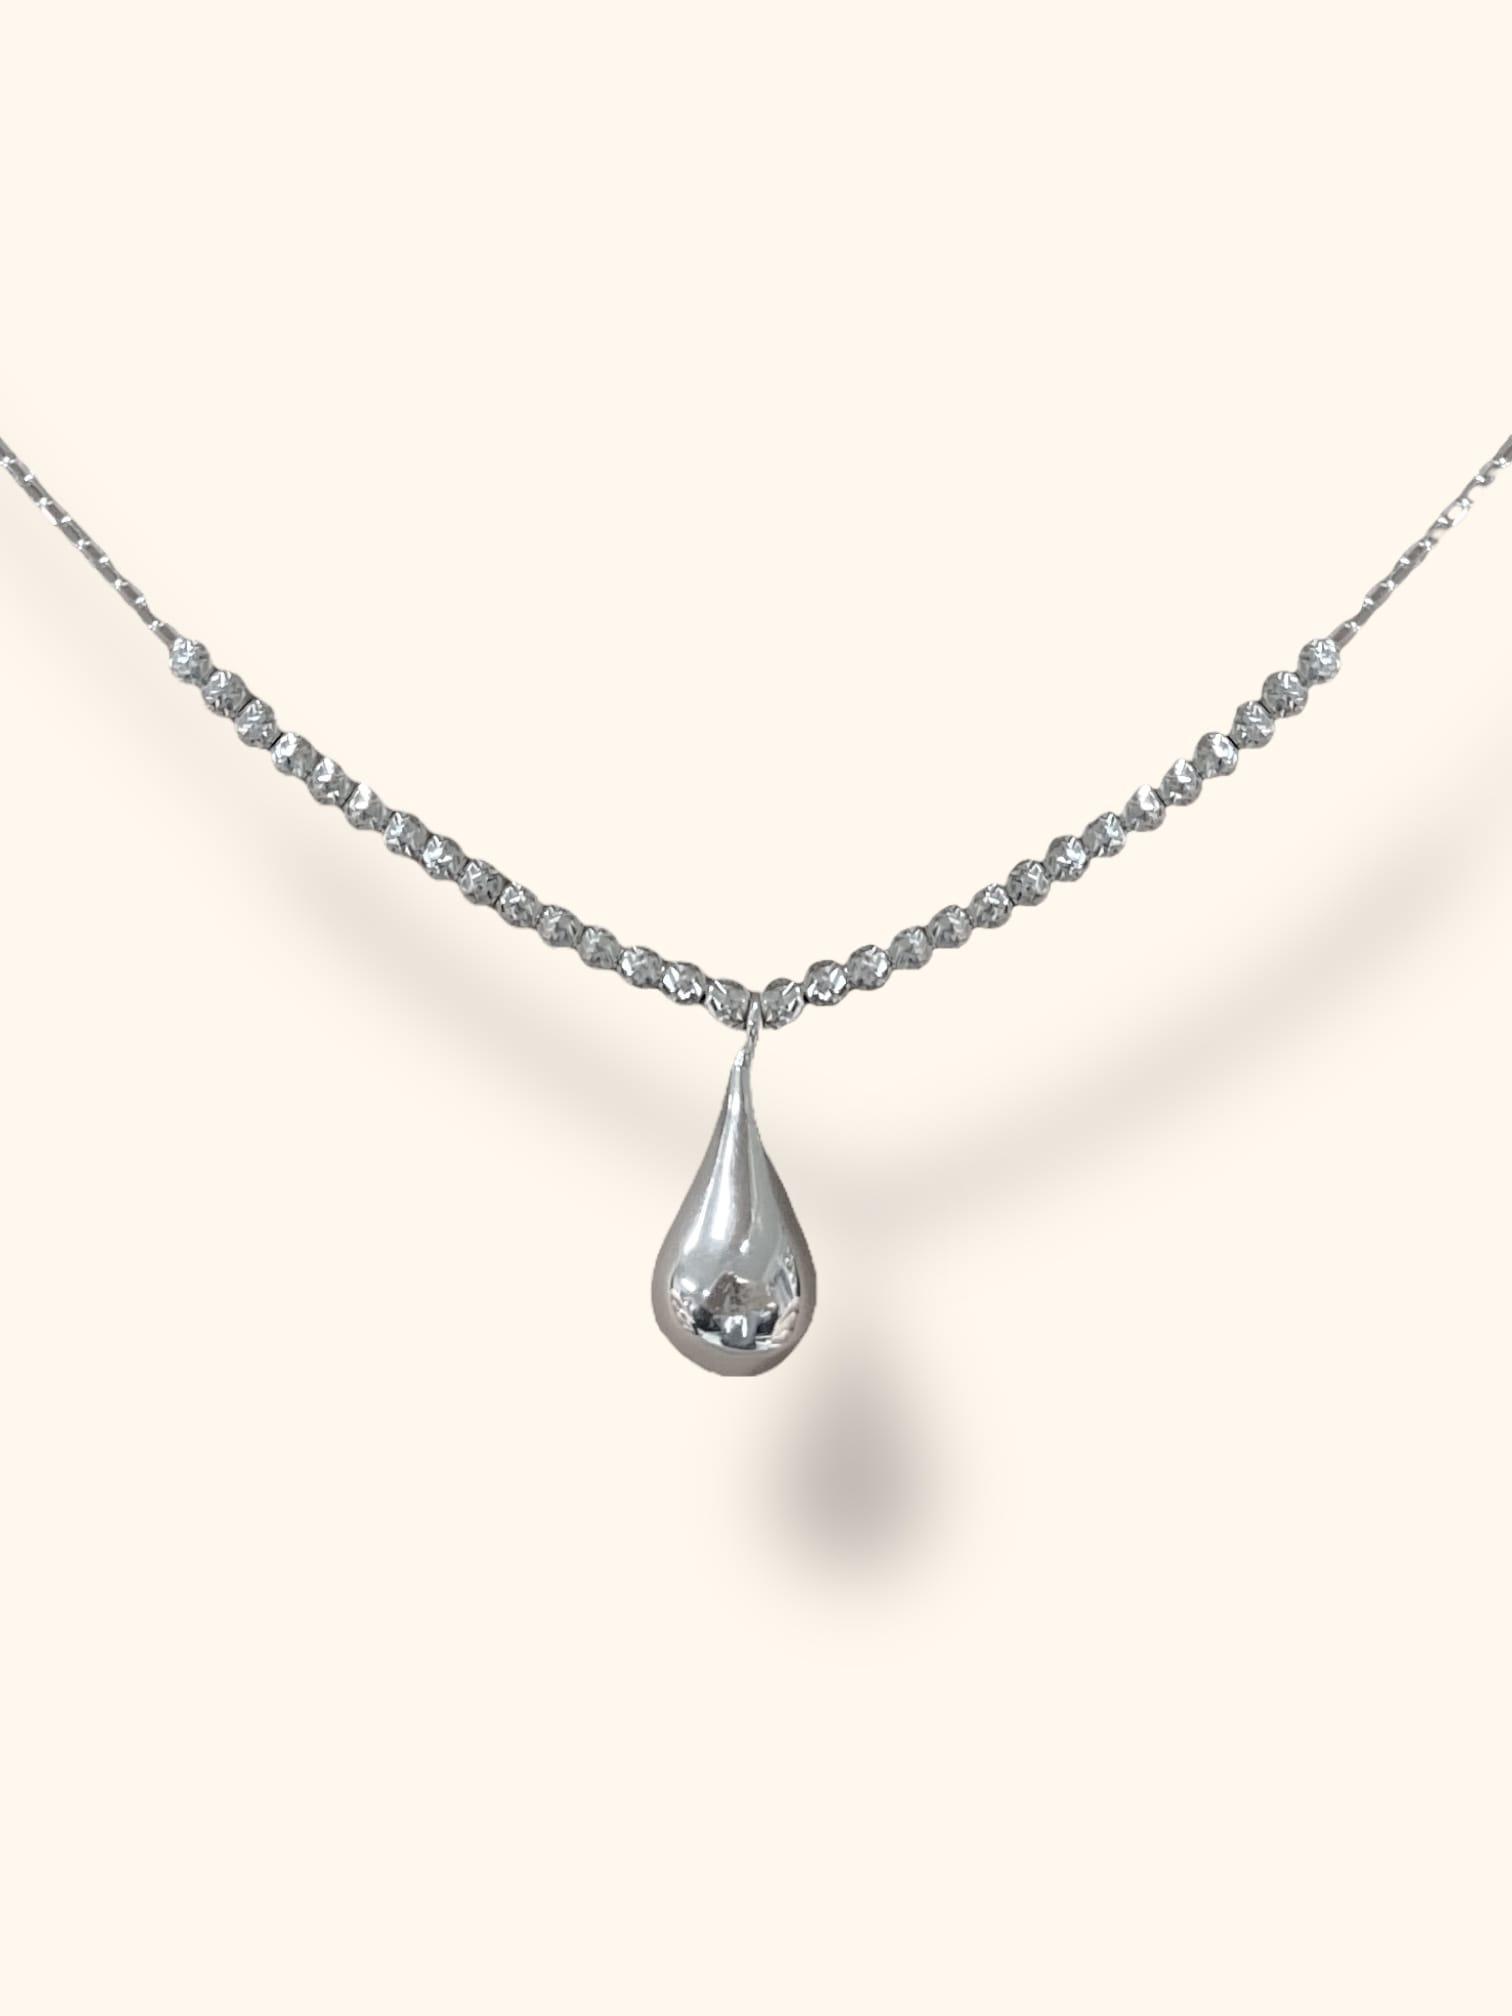 Stunning Silver Teardrop Necklace Kit